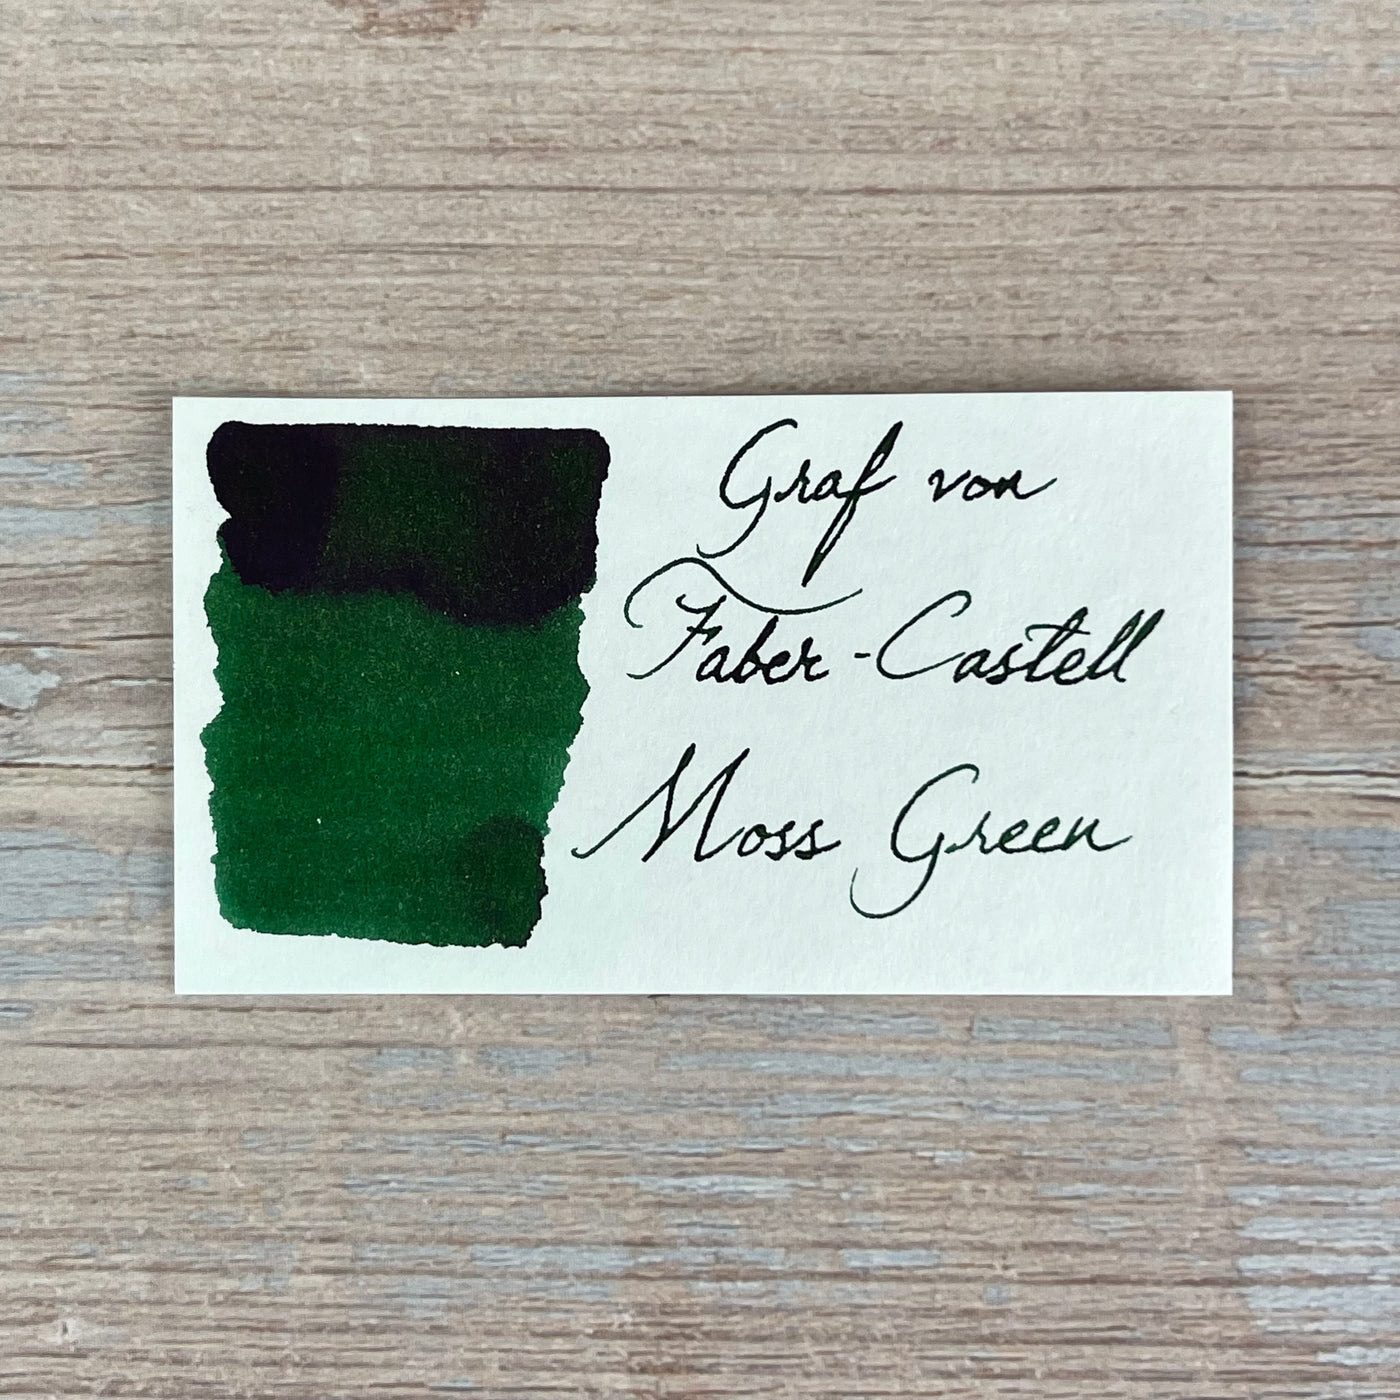 Graf von Faber-Castell Moss Green - 75ml Bottled Ink